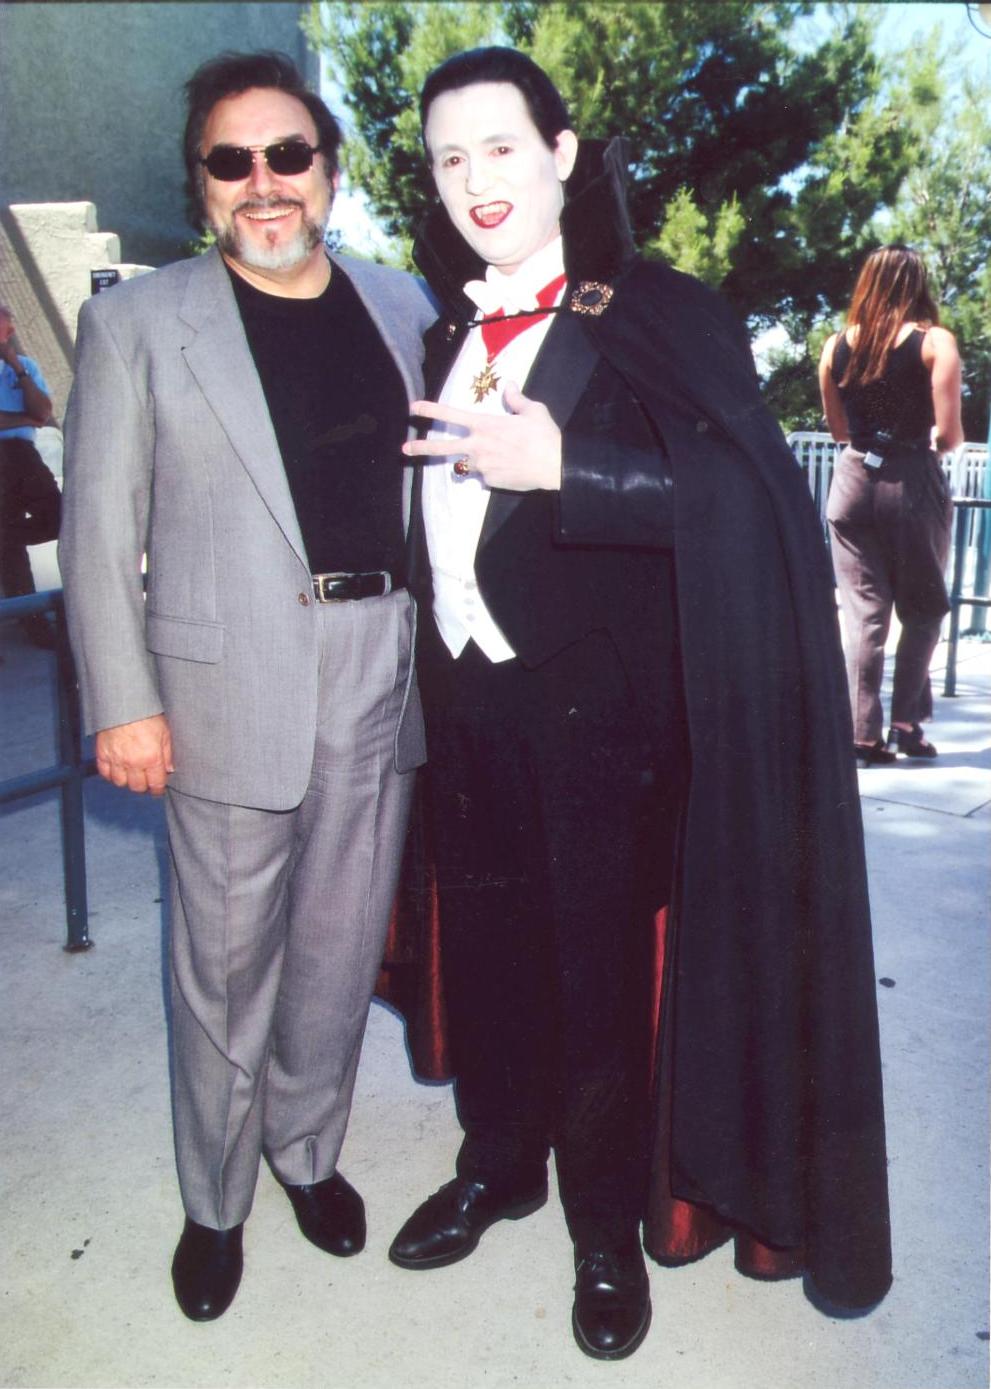 Roger Garcia as Dracula with actor Joseph Mascolo